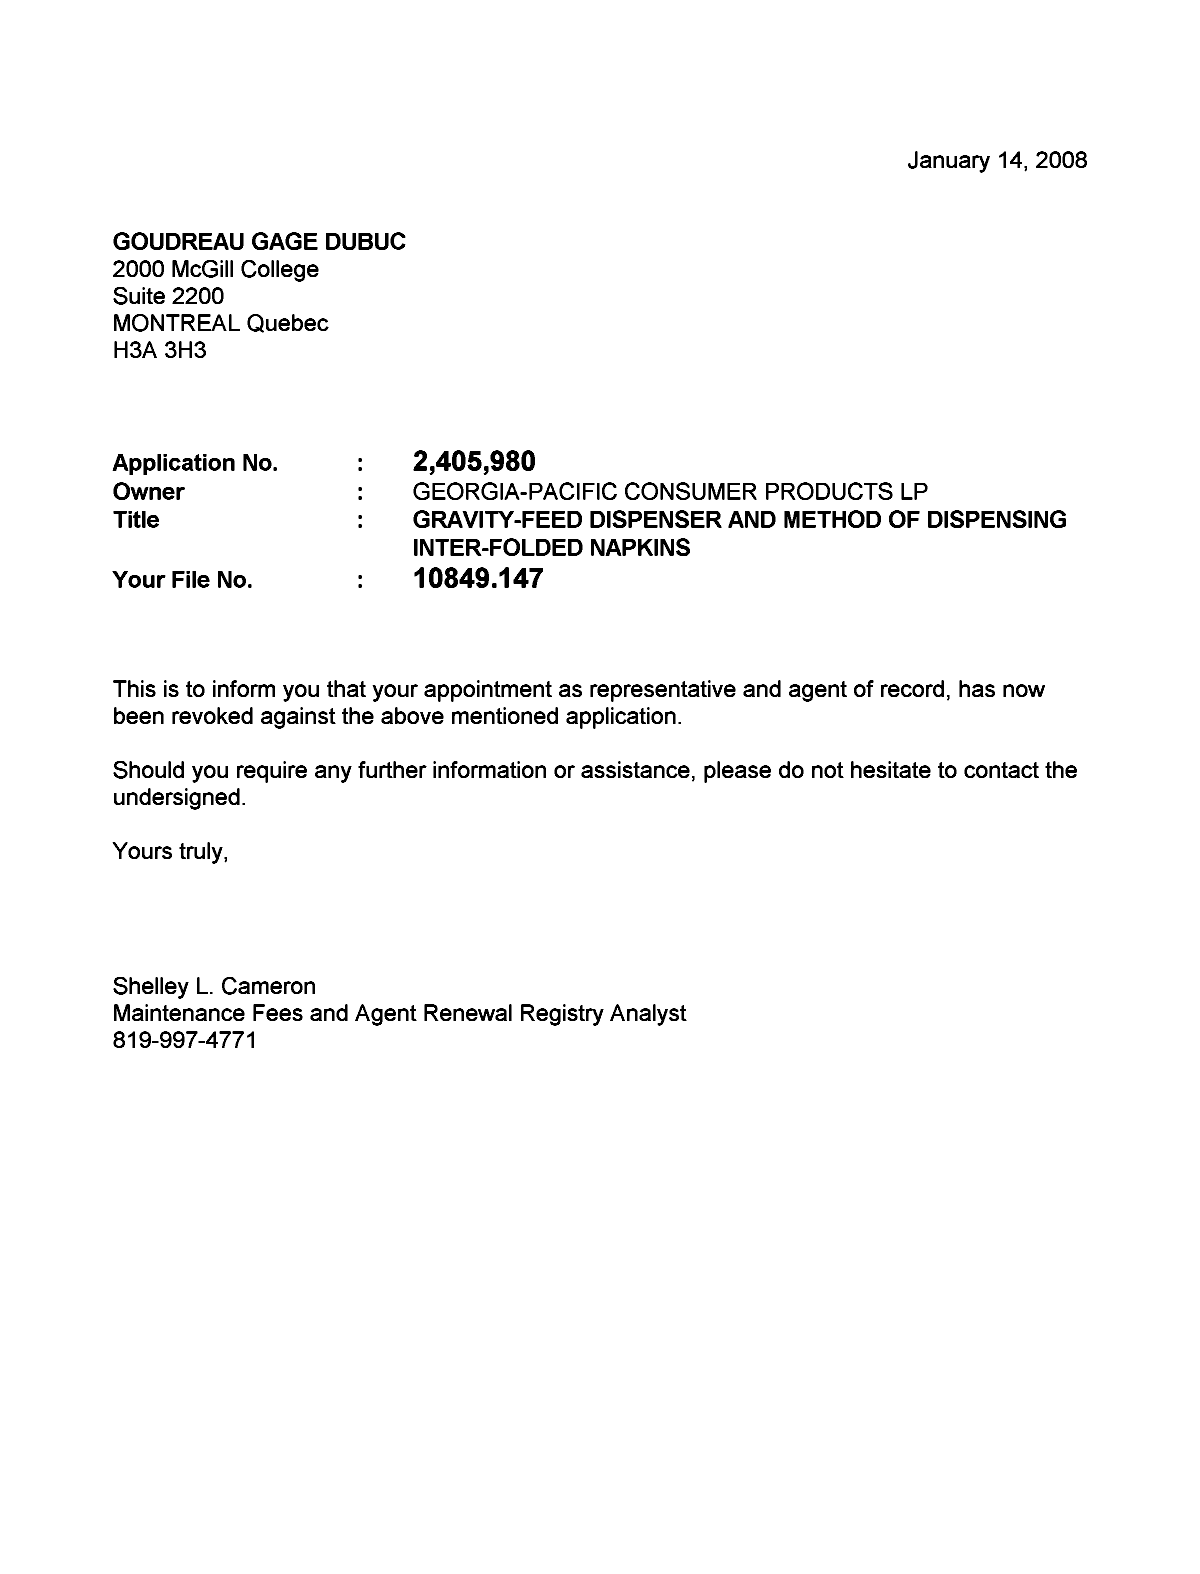 Canadian Patent Document 2405980. Correspondence 20080114. Image 1 of 1